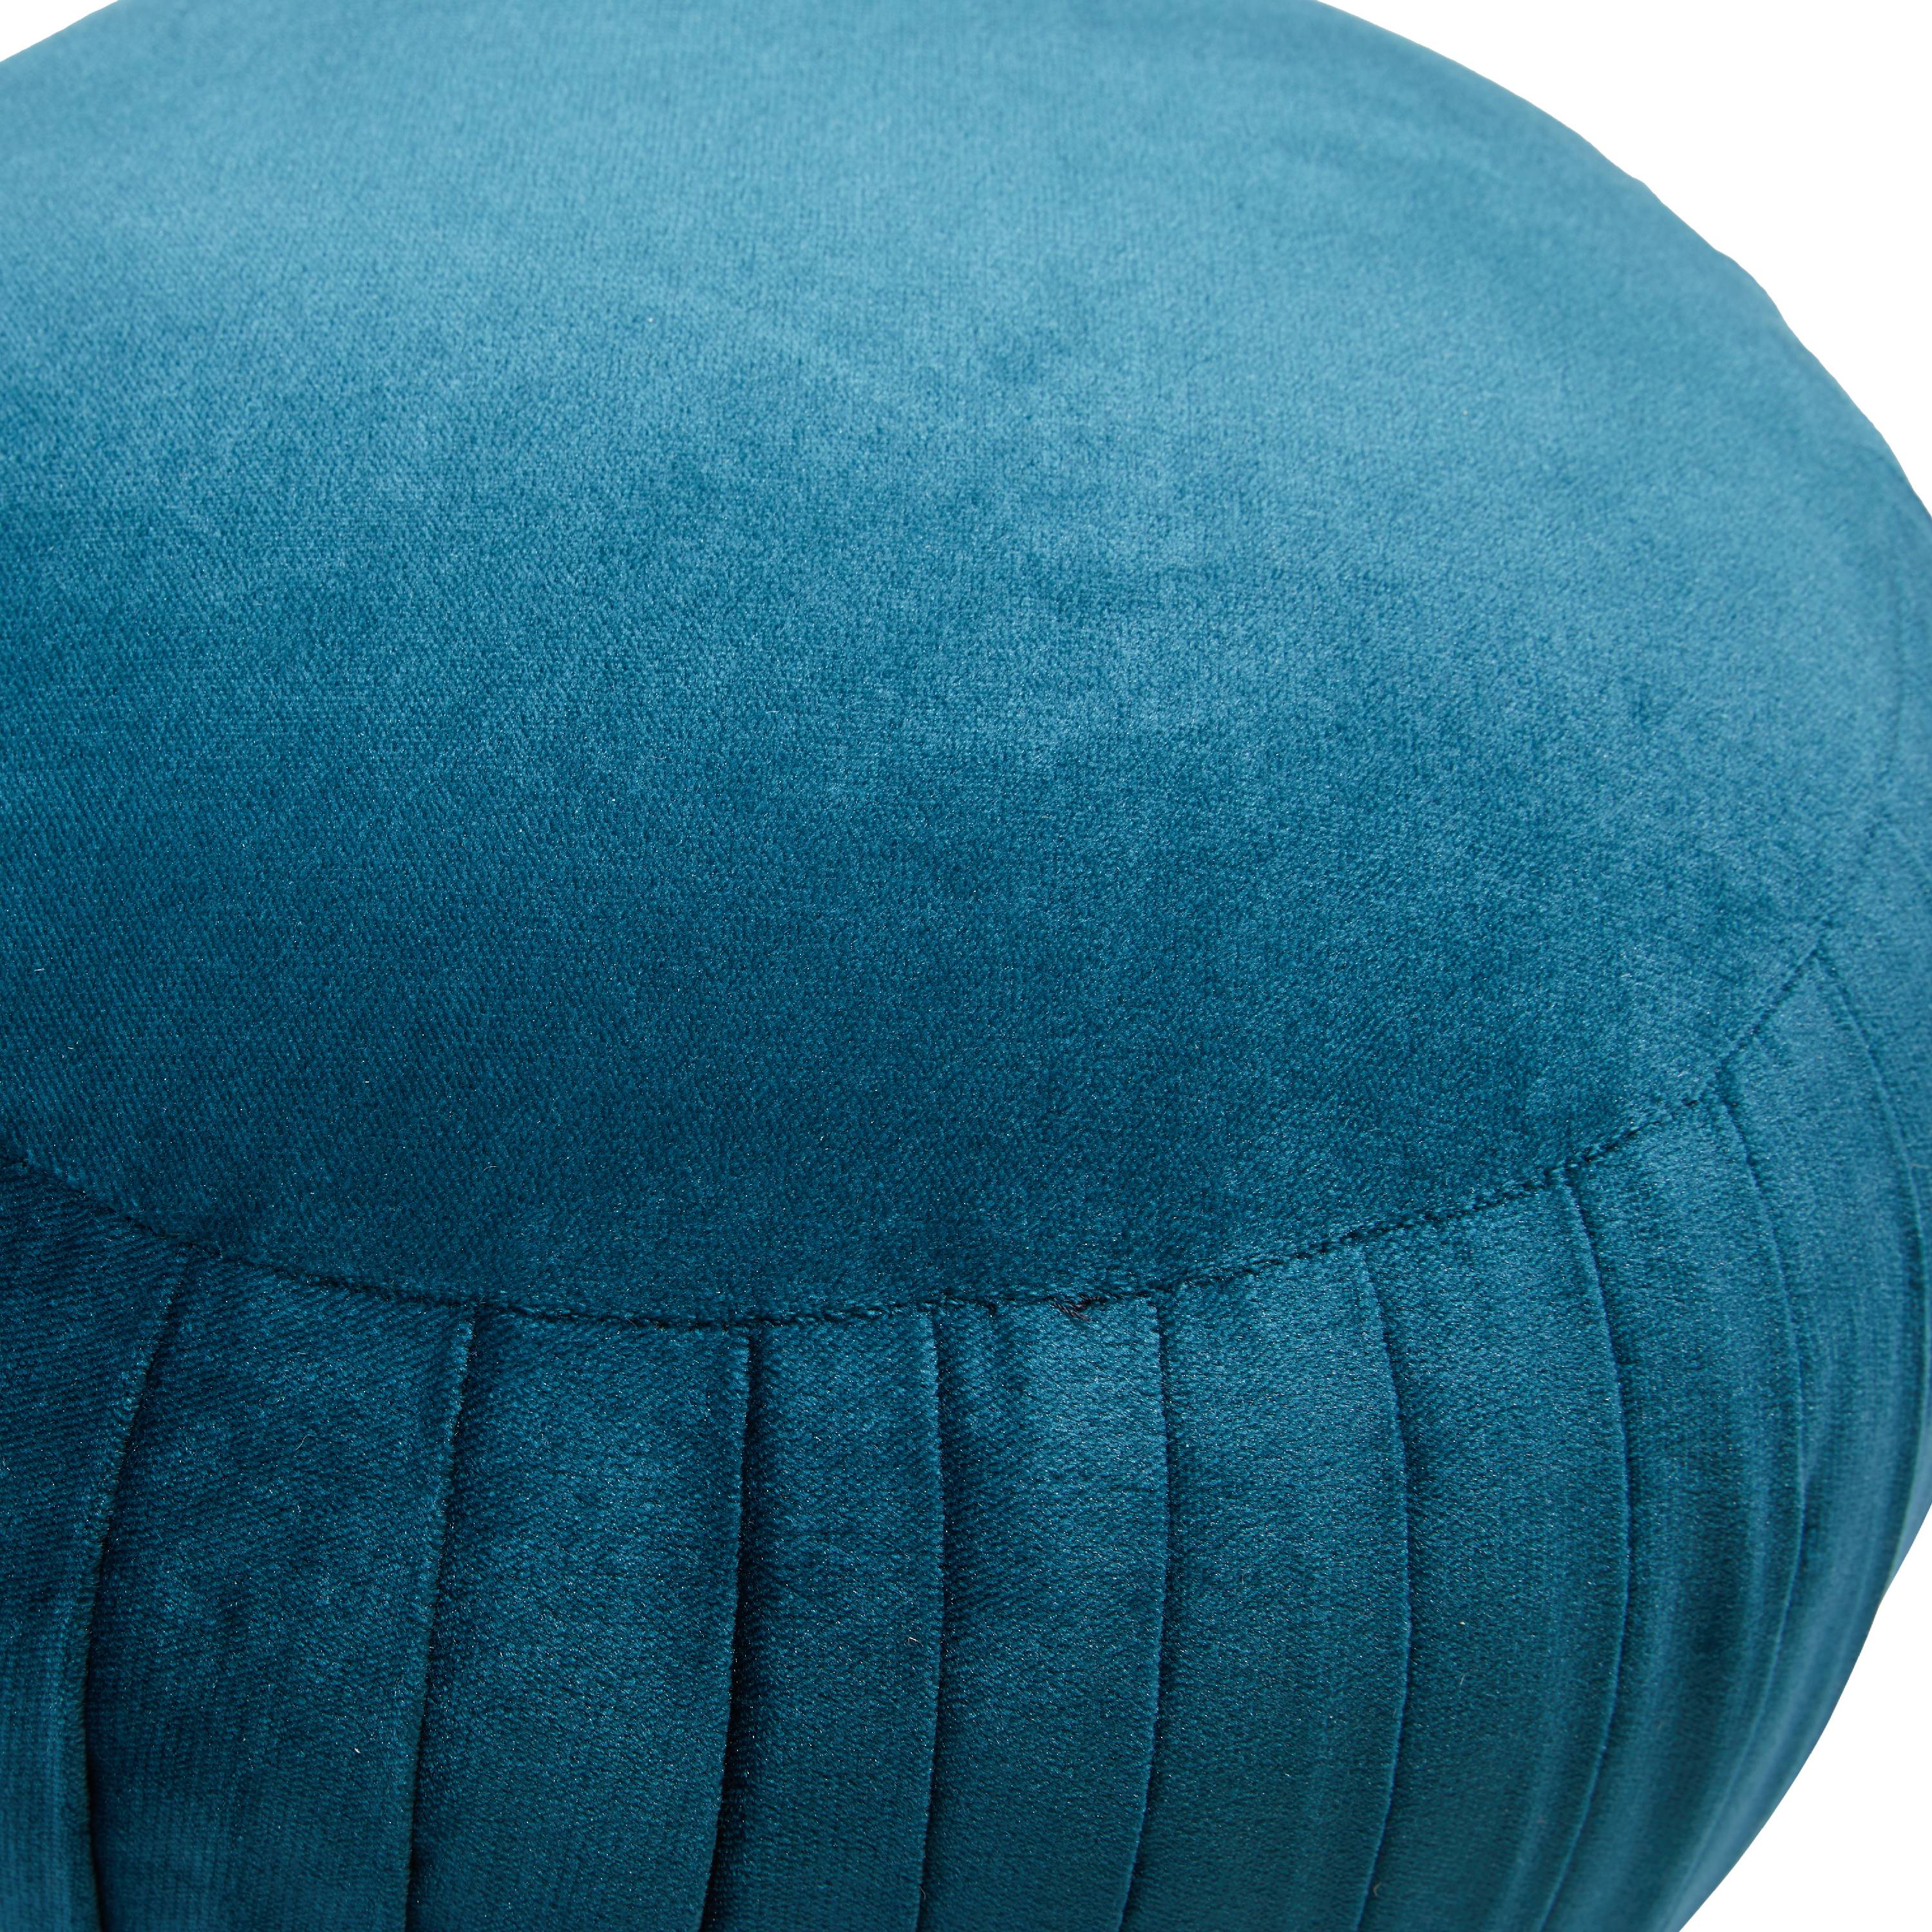 Drew Barrymore Flower Home Velvet Pleated Round Pouf Ottoman, Blue - image 4 of 6